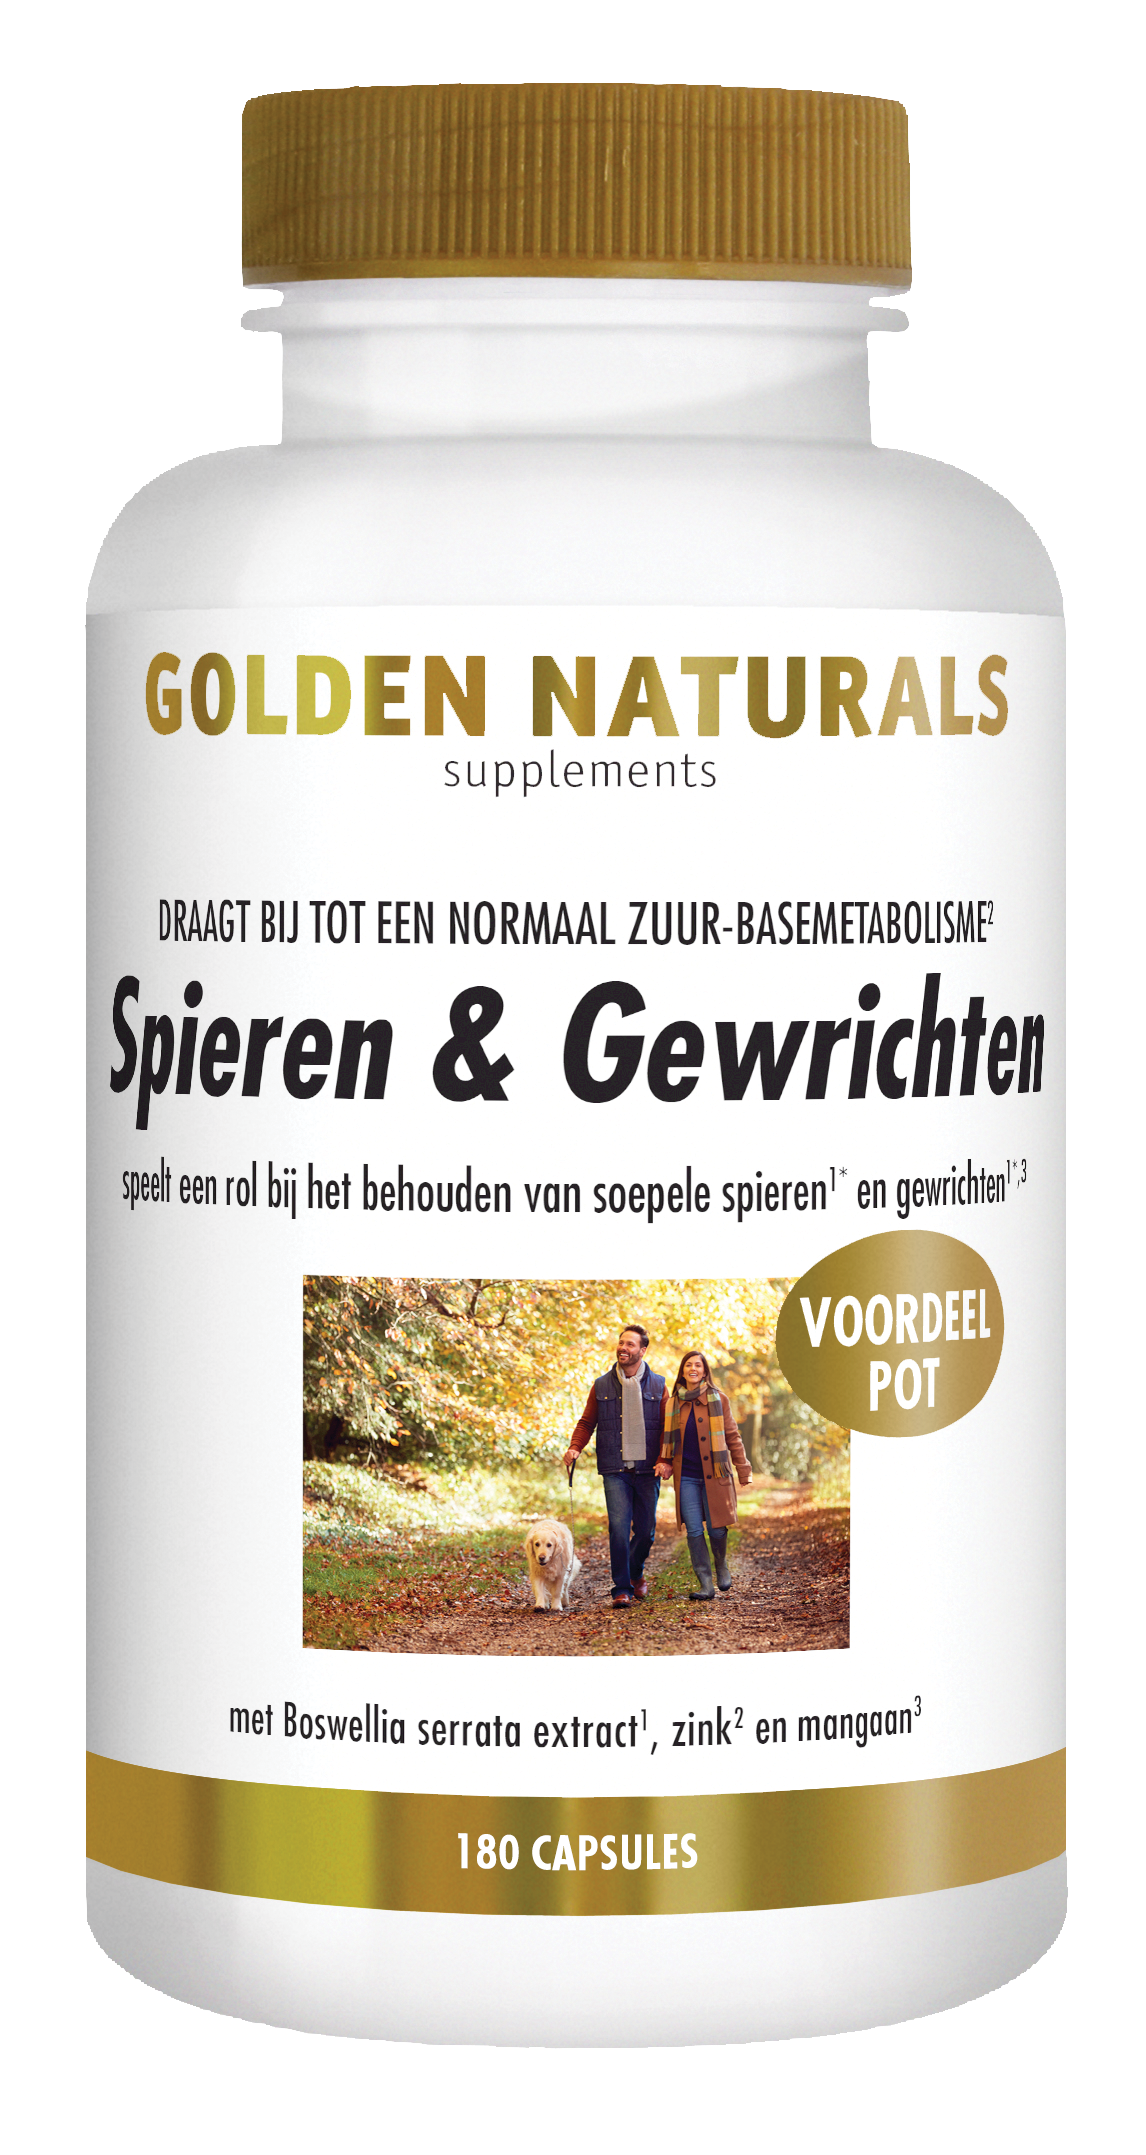 Naturals Groenlipmossel & kopen? - GoldenNaturals.nl